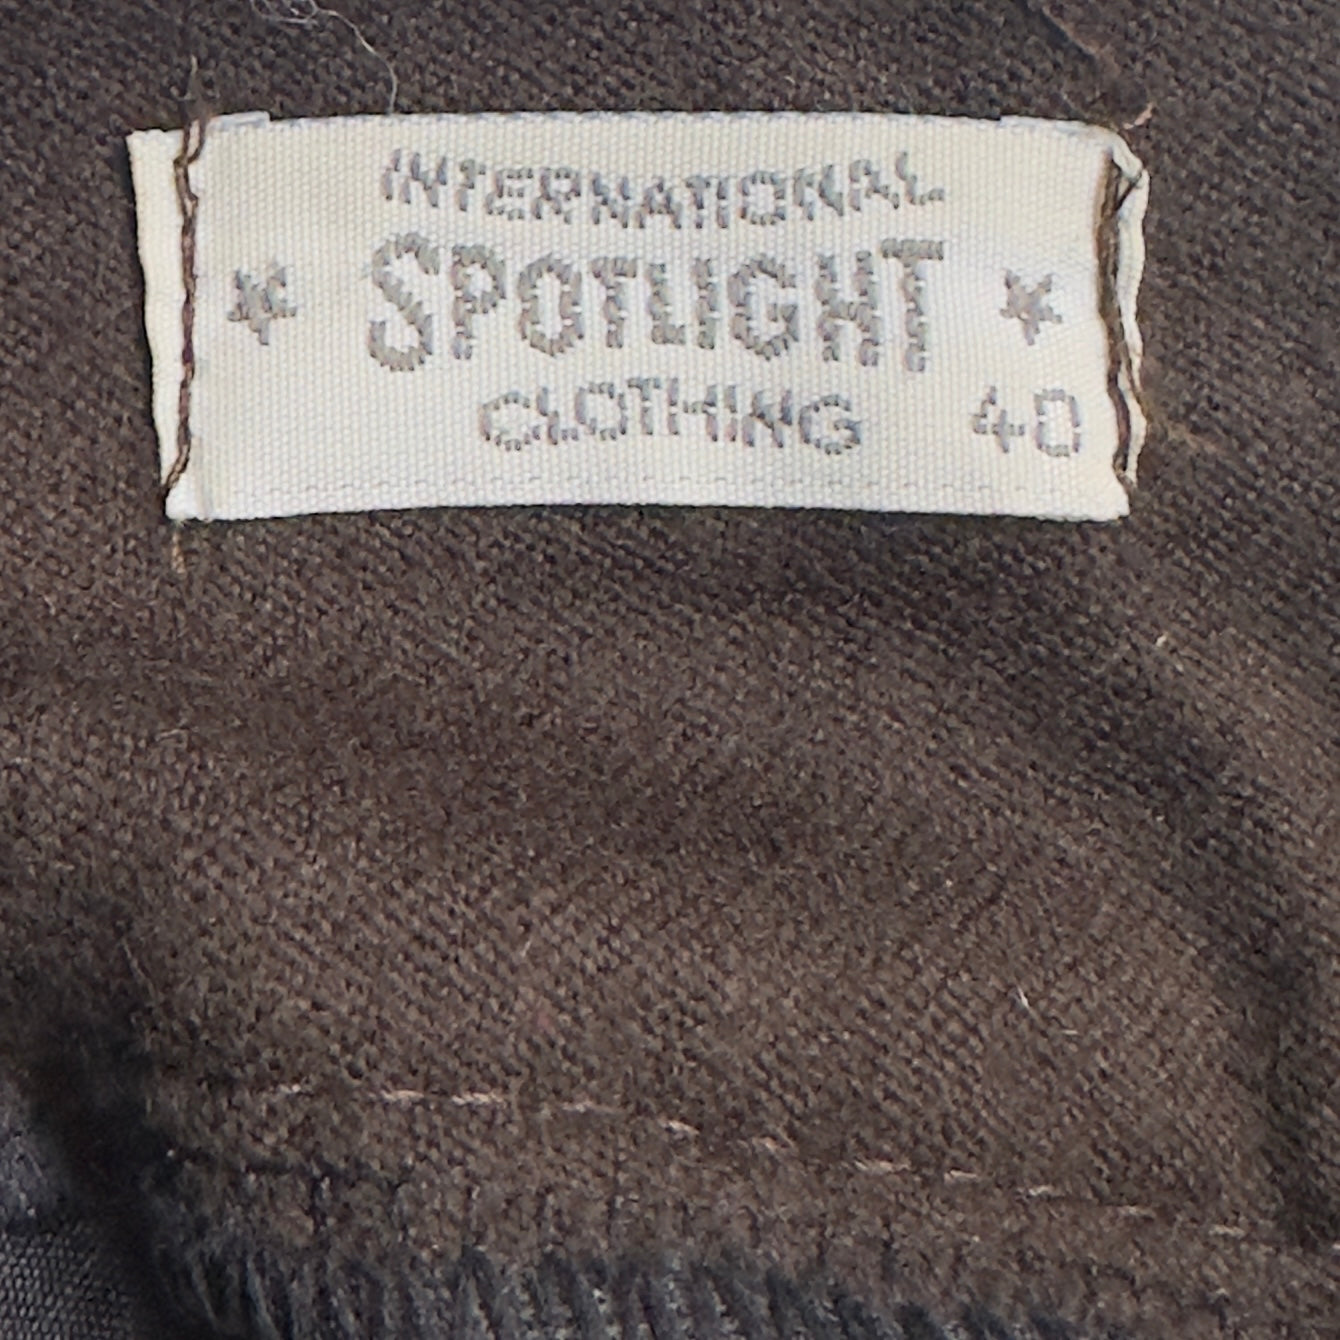 Vintage Brown Wool Pants, size EU40